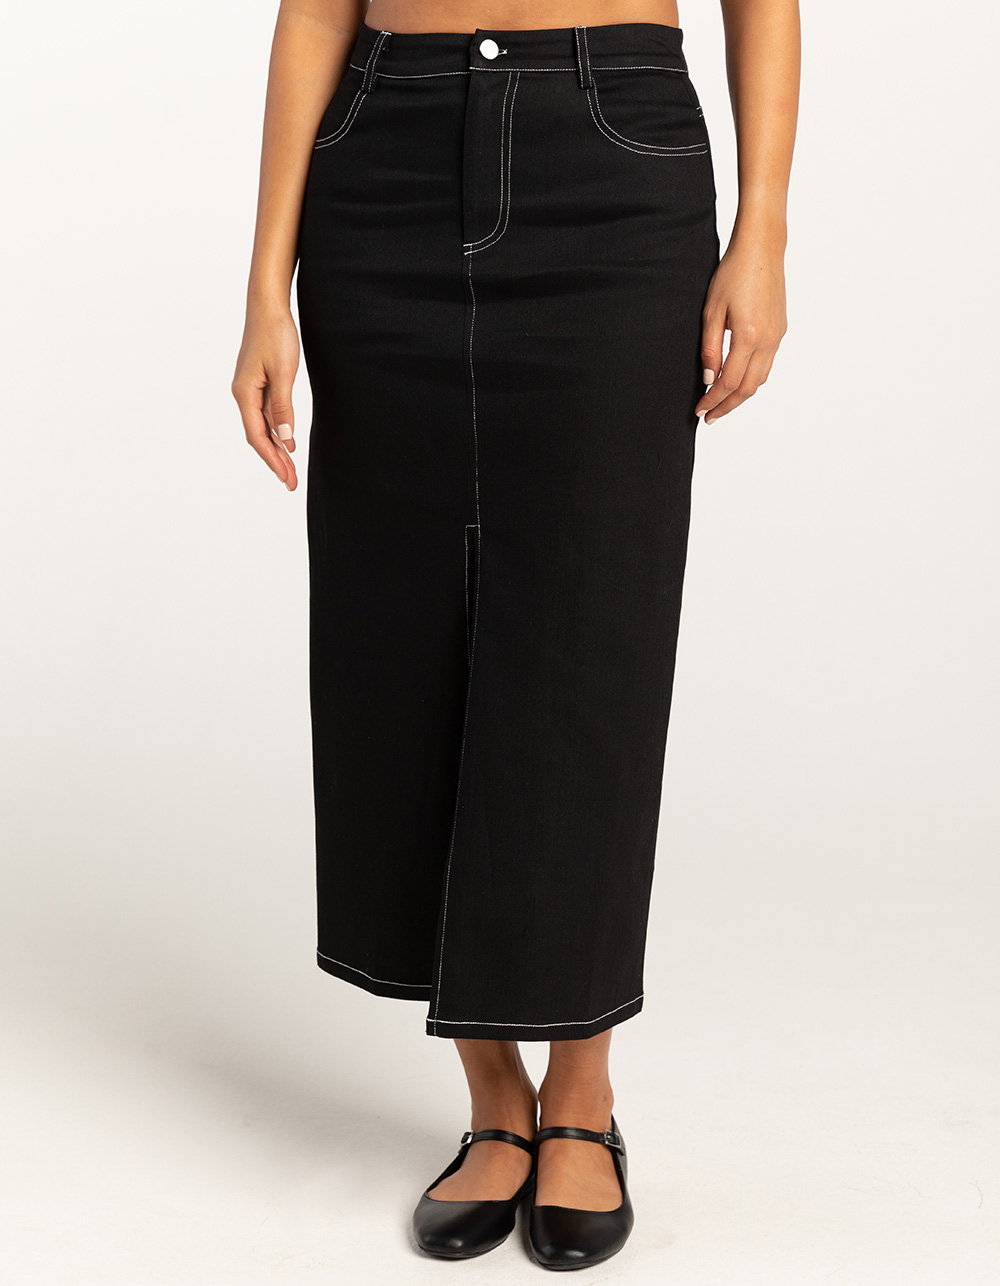 WEST OF MELROSE Contrast Womens Maxi Skirt - BLACK | Tillys